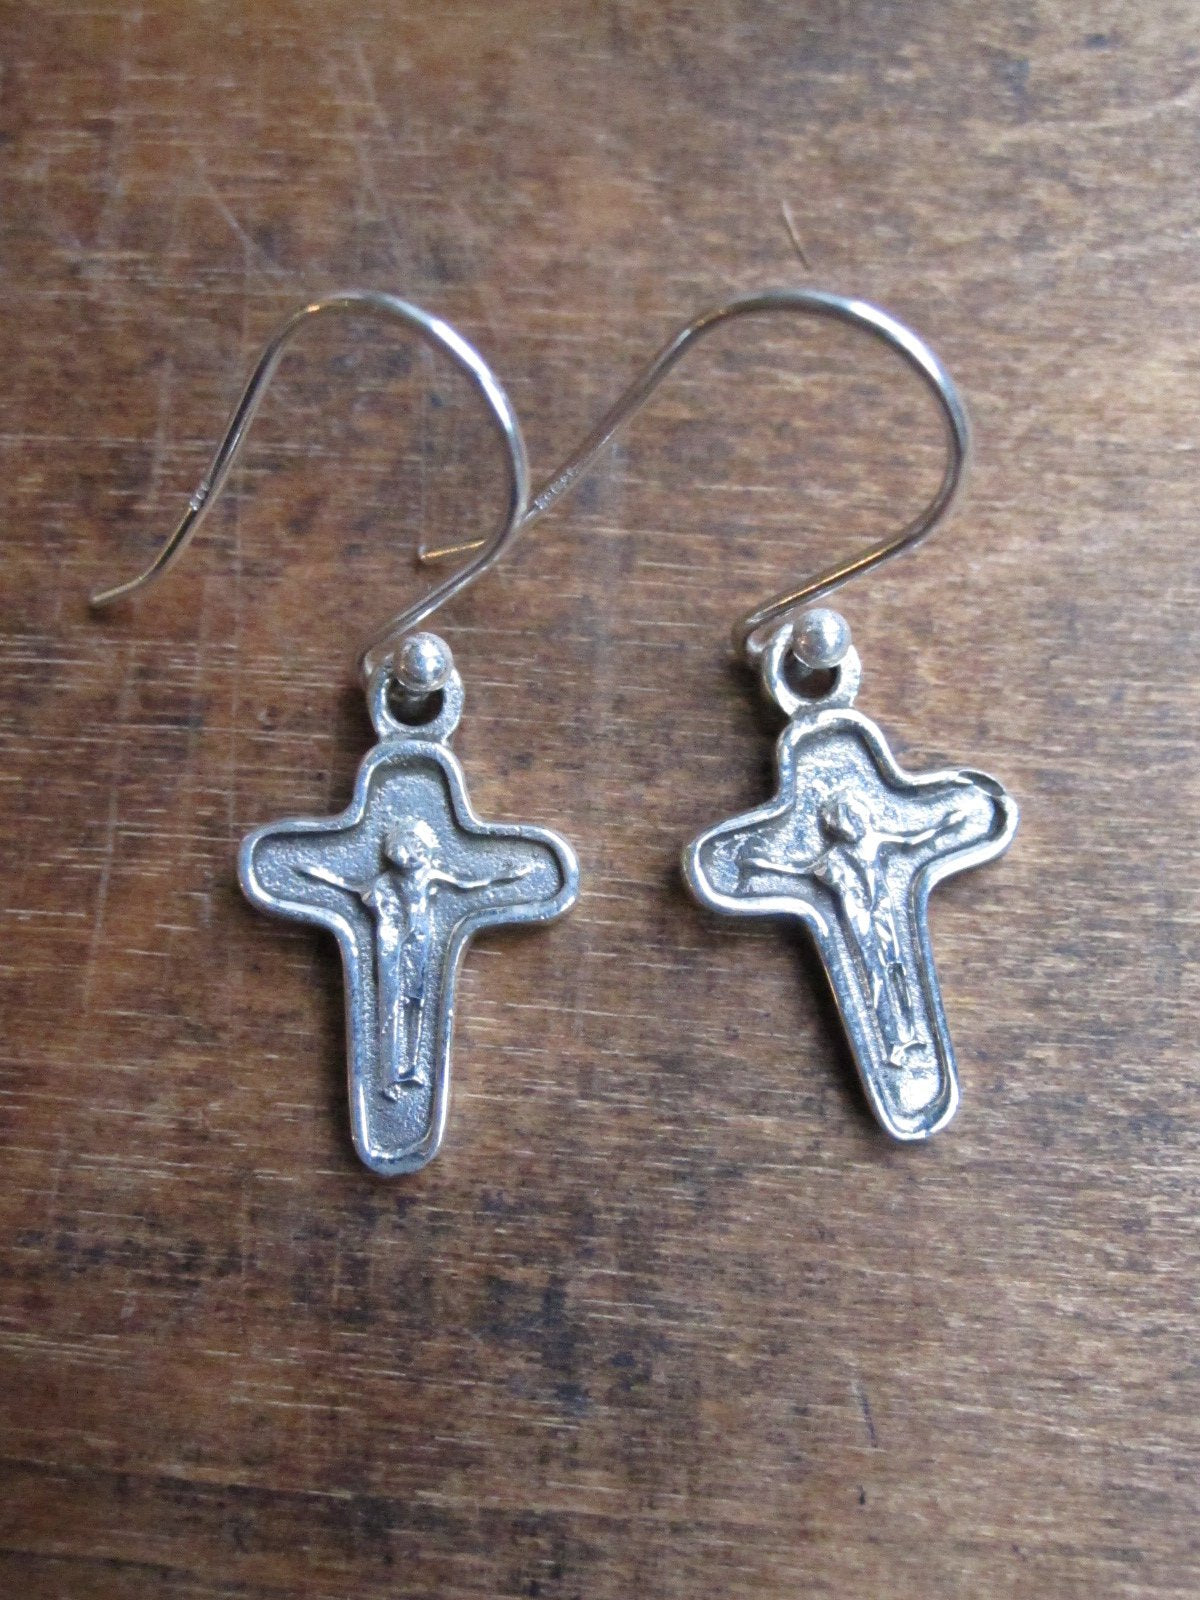 WDTS Jesus on the cross earrings.